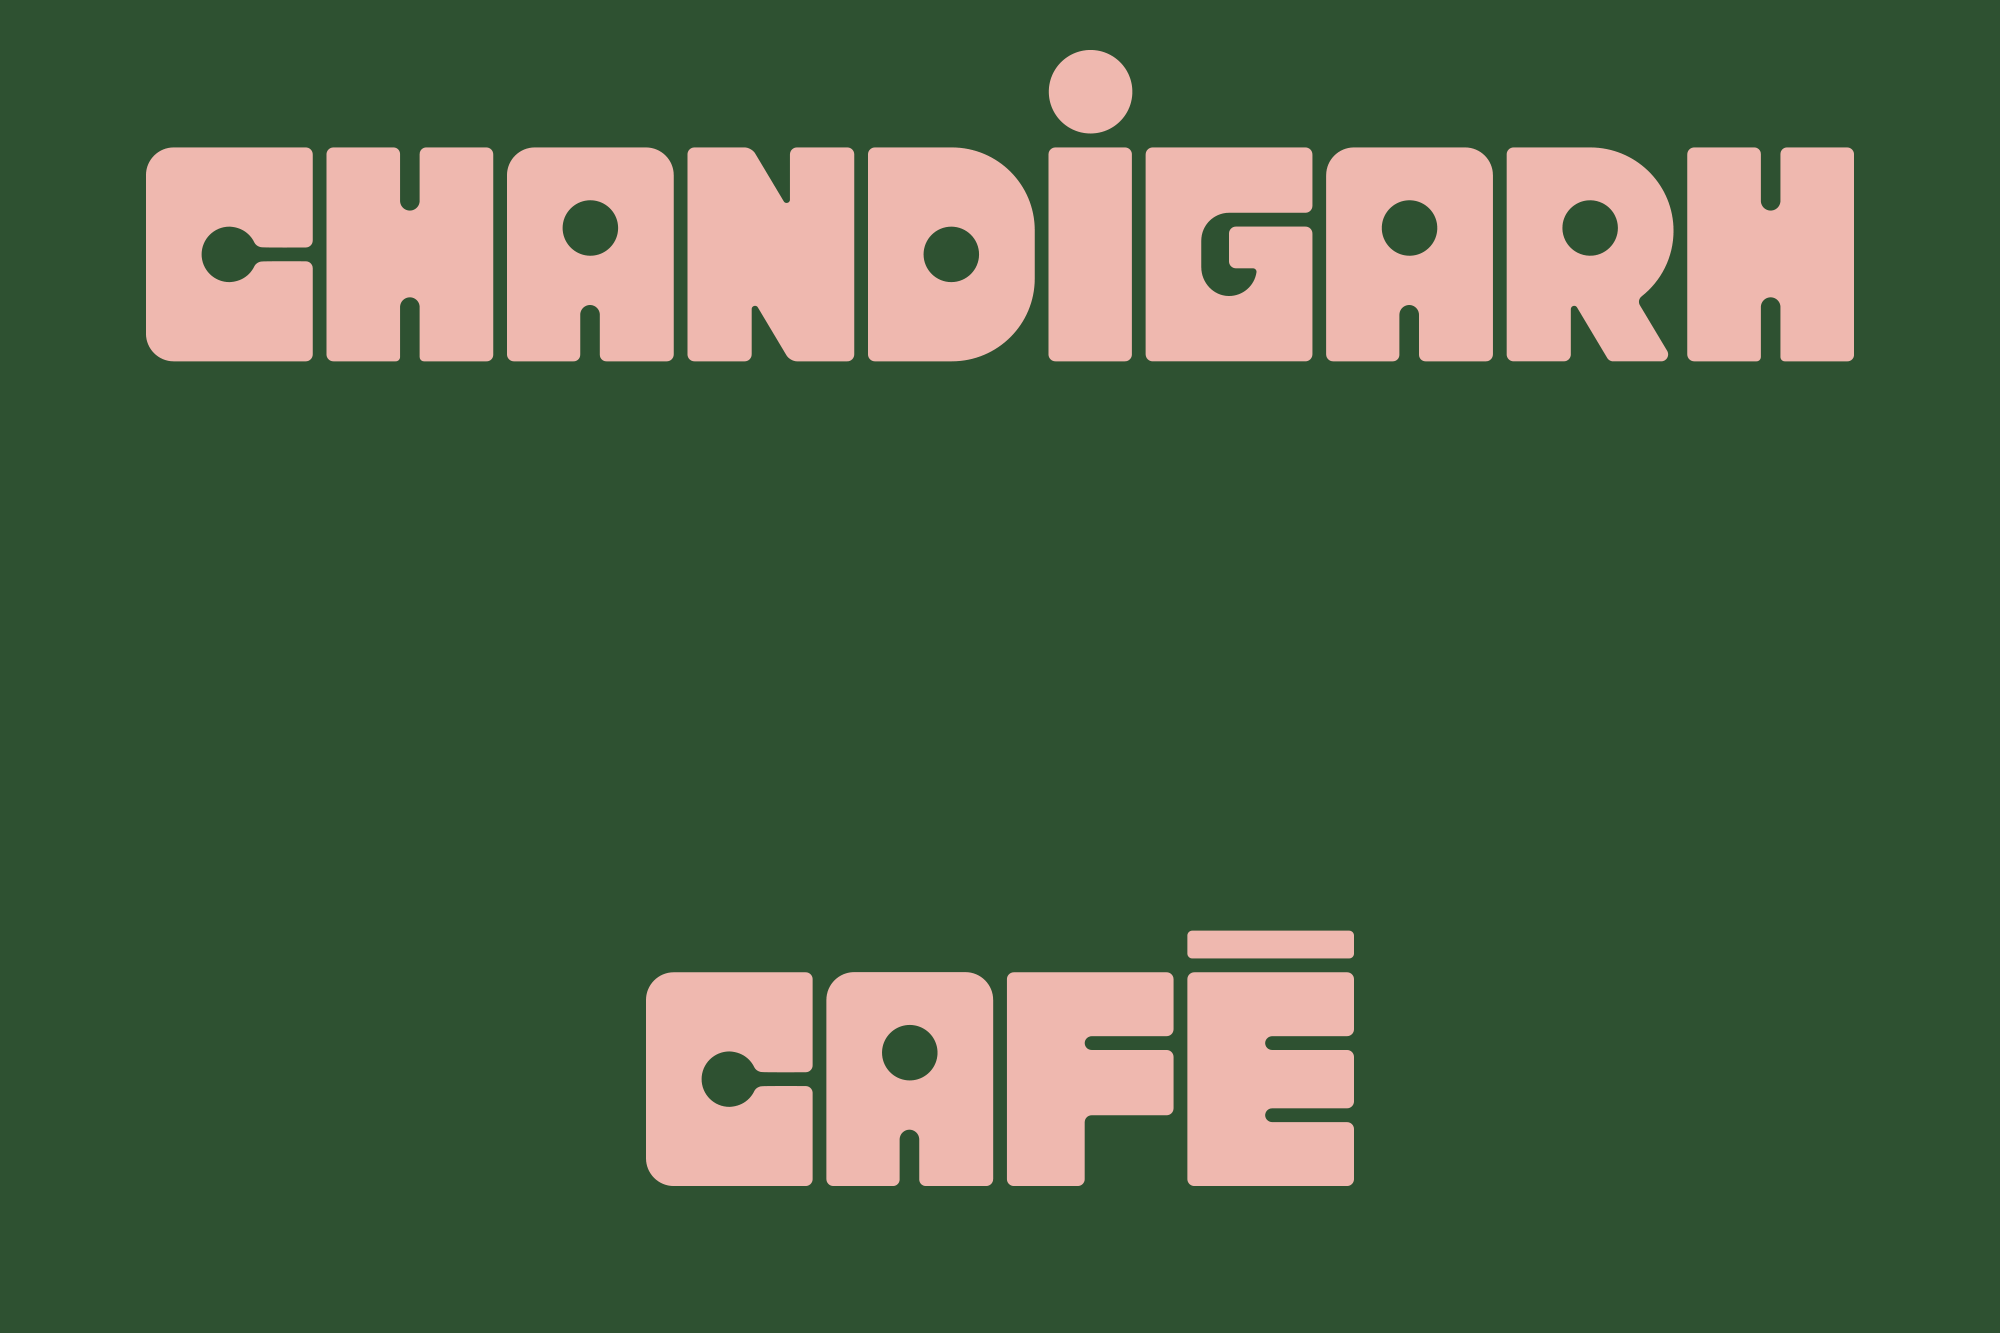 Chandigarh Café